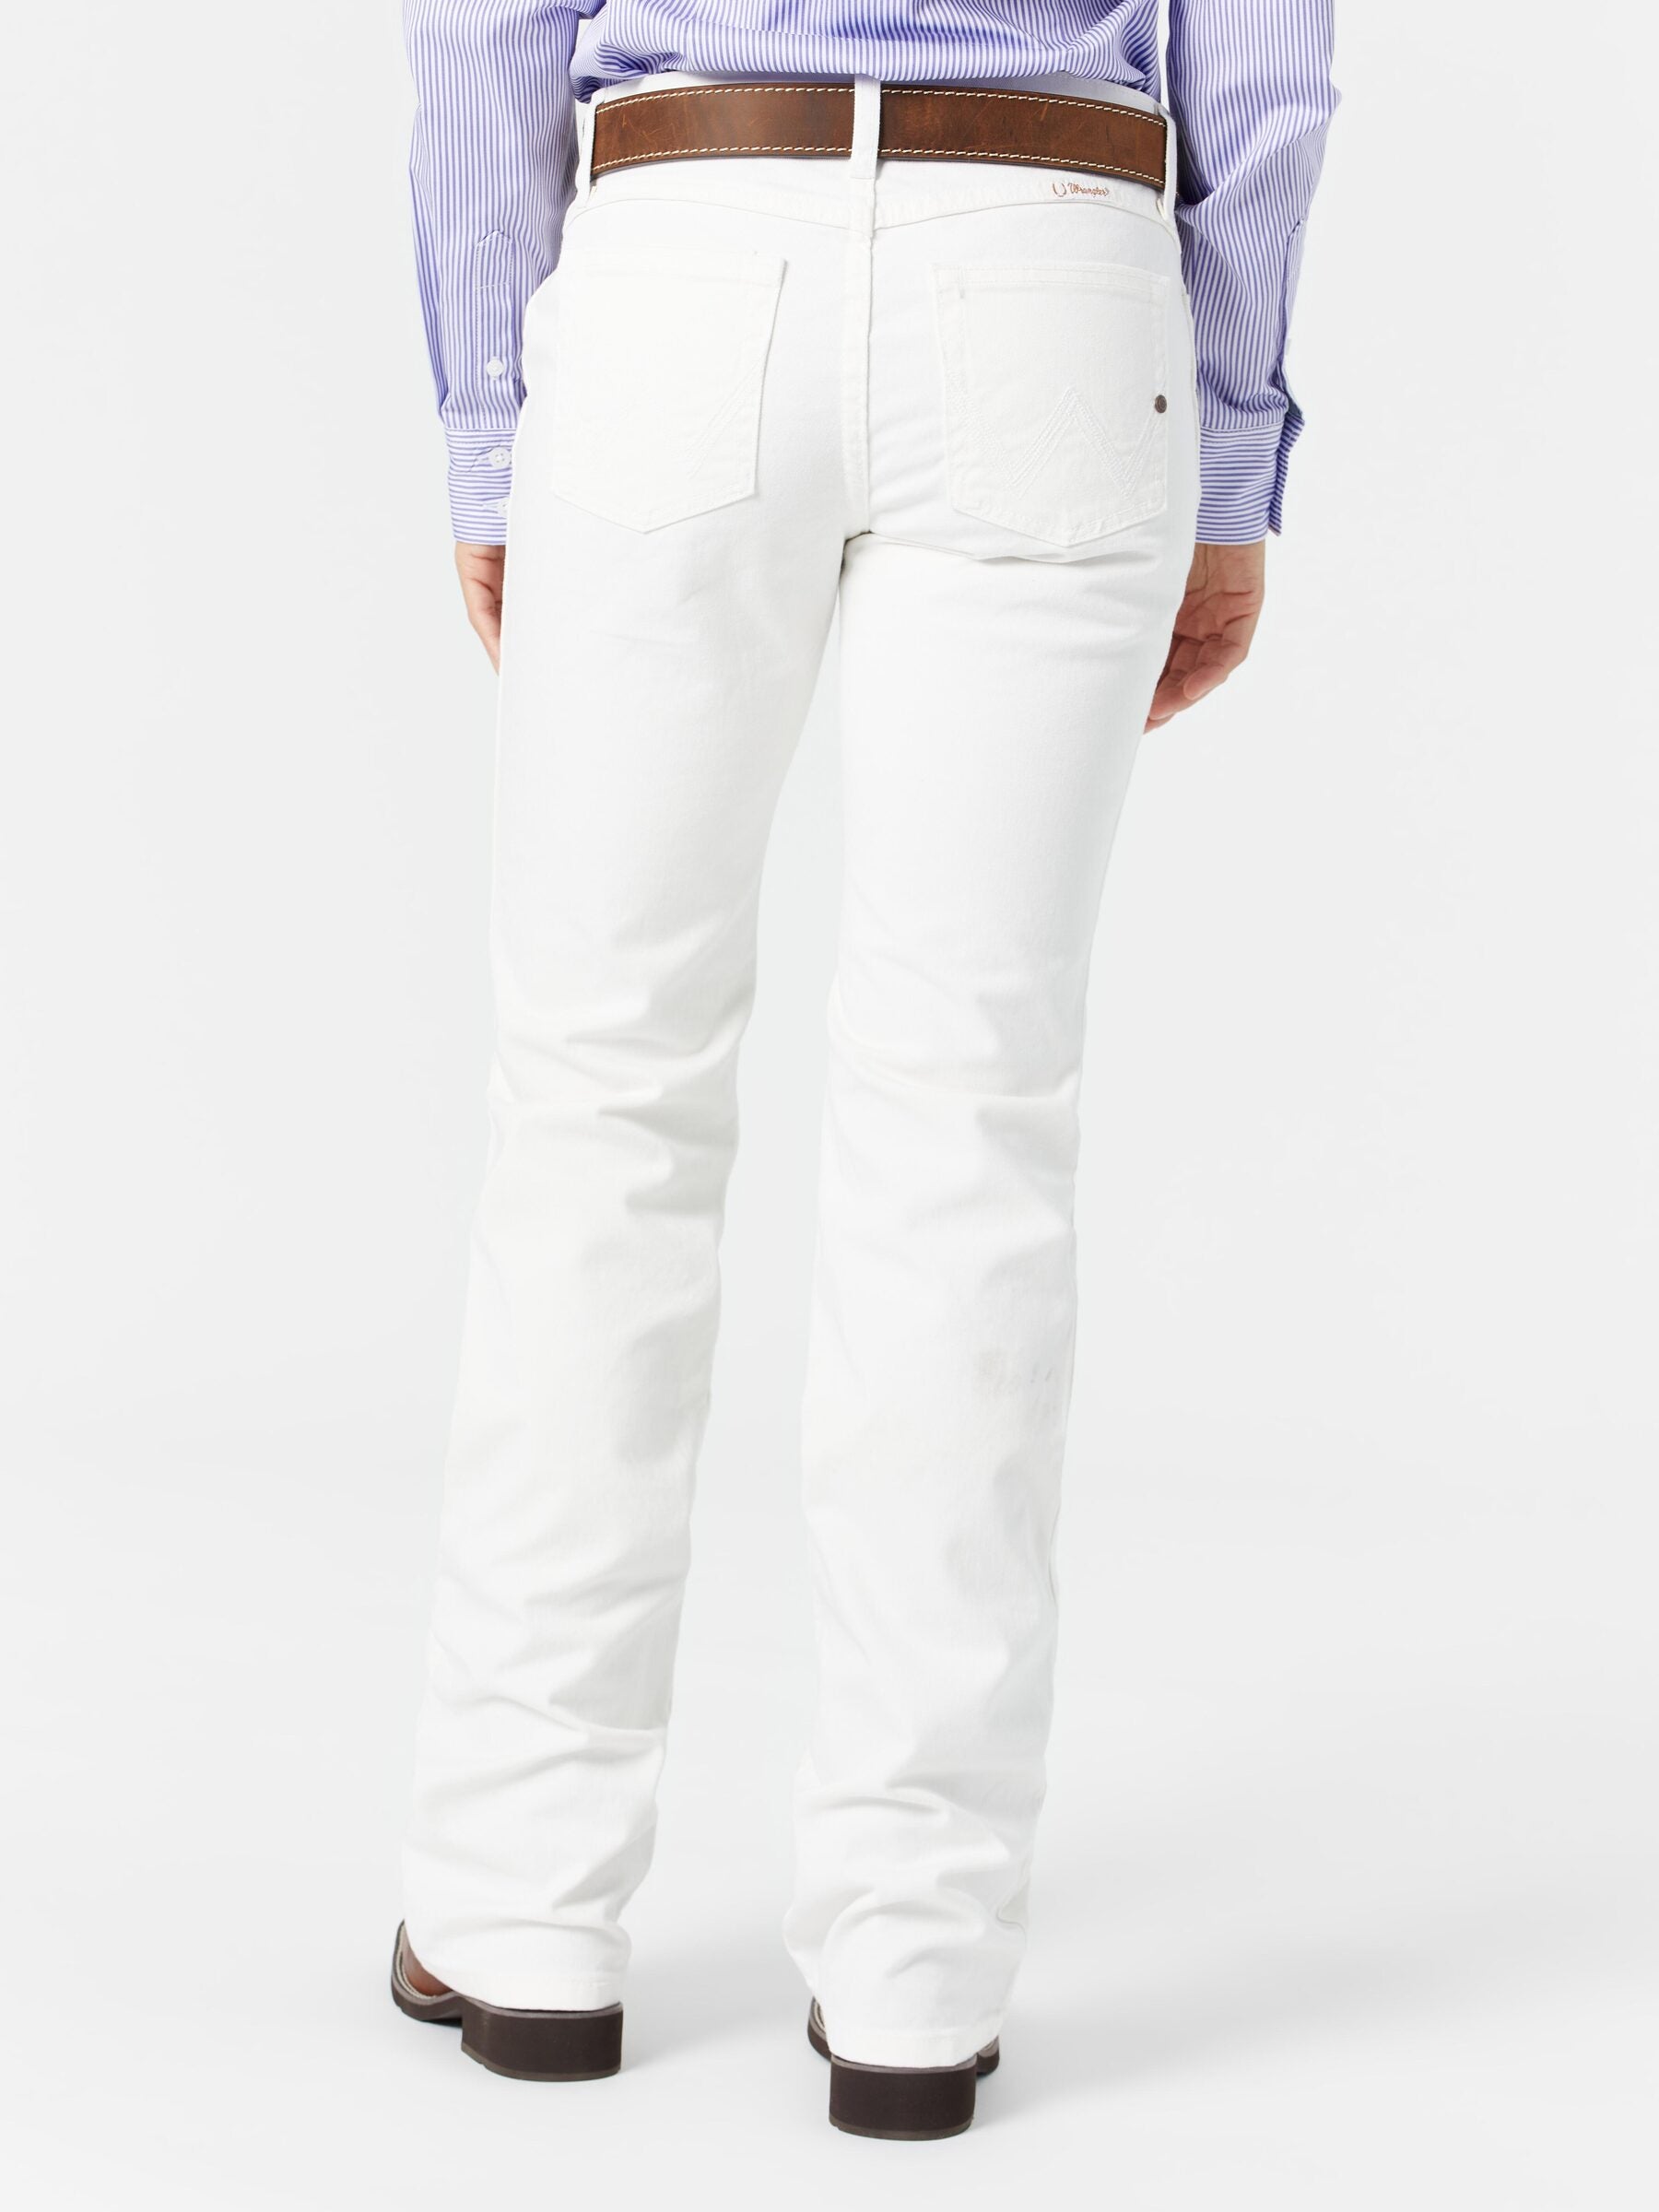 Wrangler Women's Q-Baby Mid-Rise Dyeable White Jeans